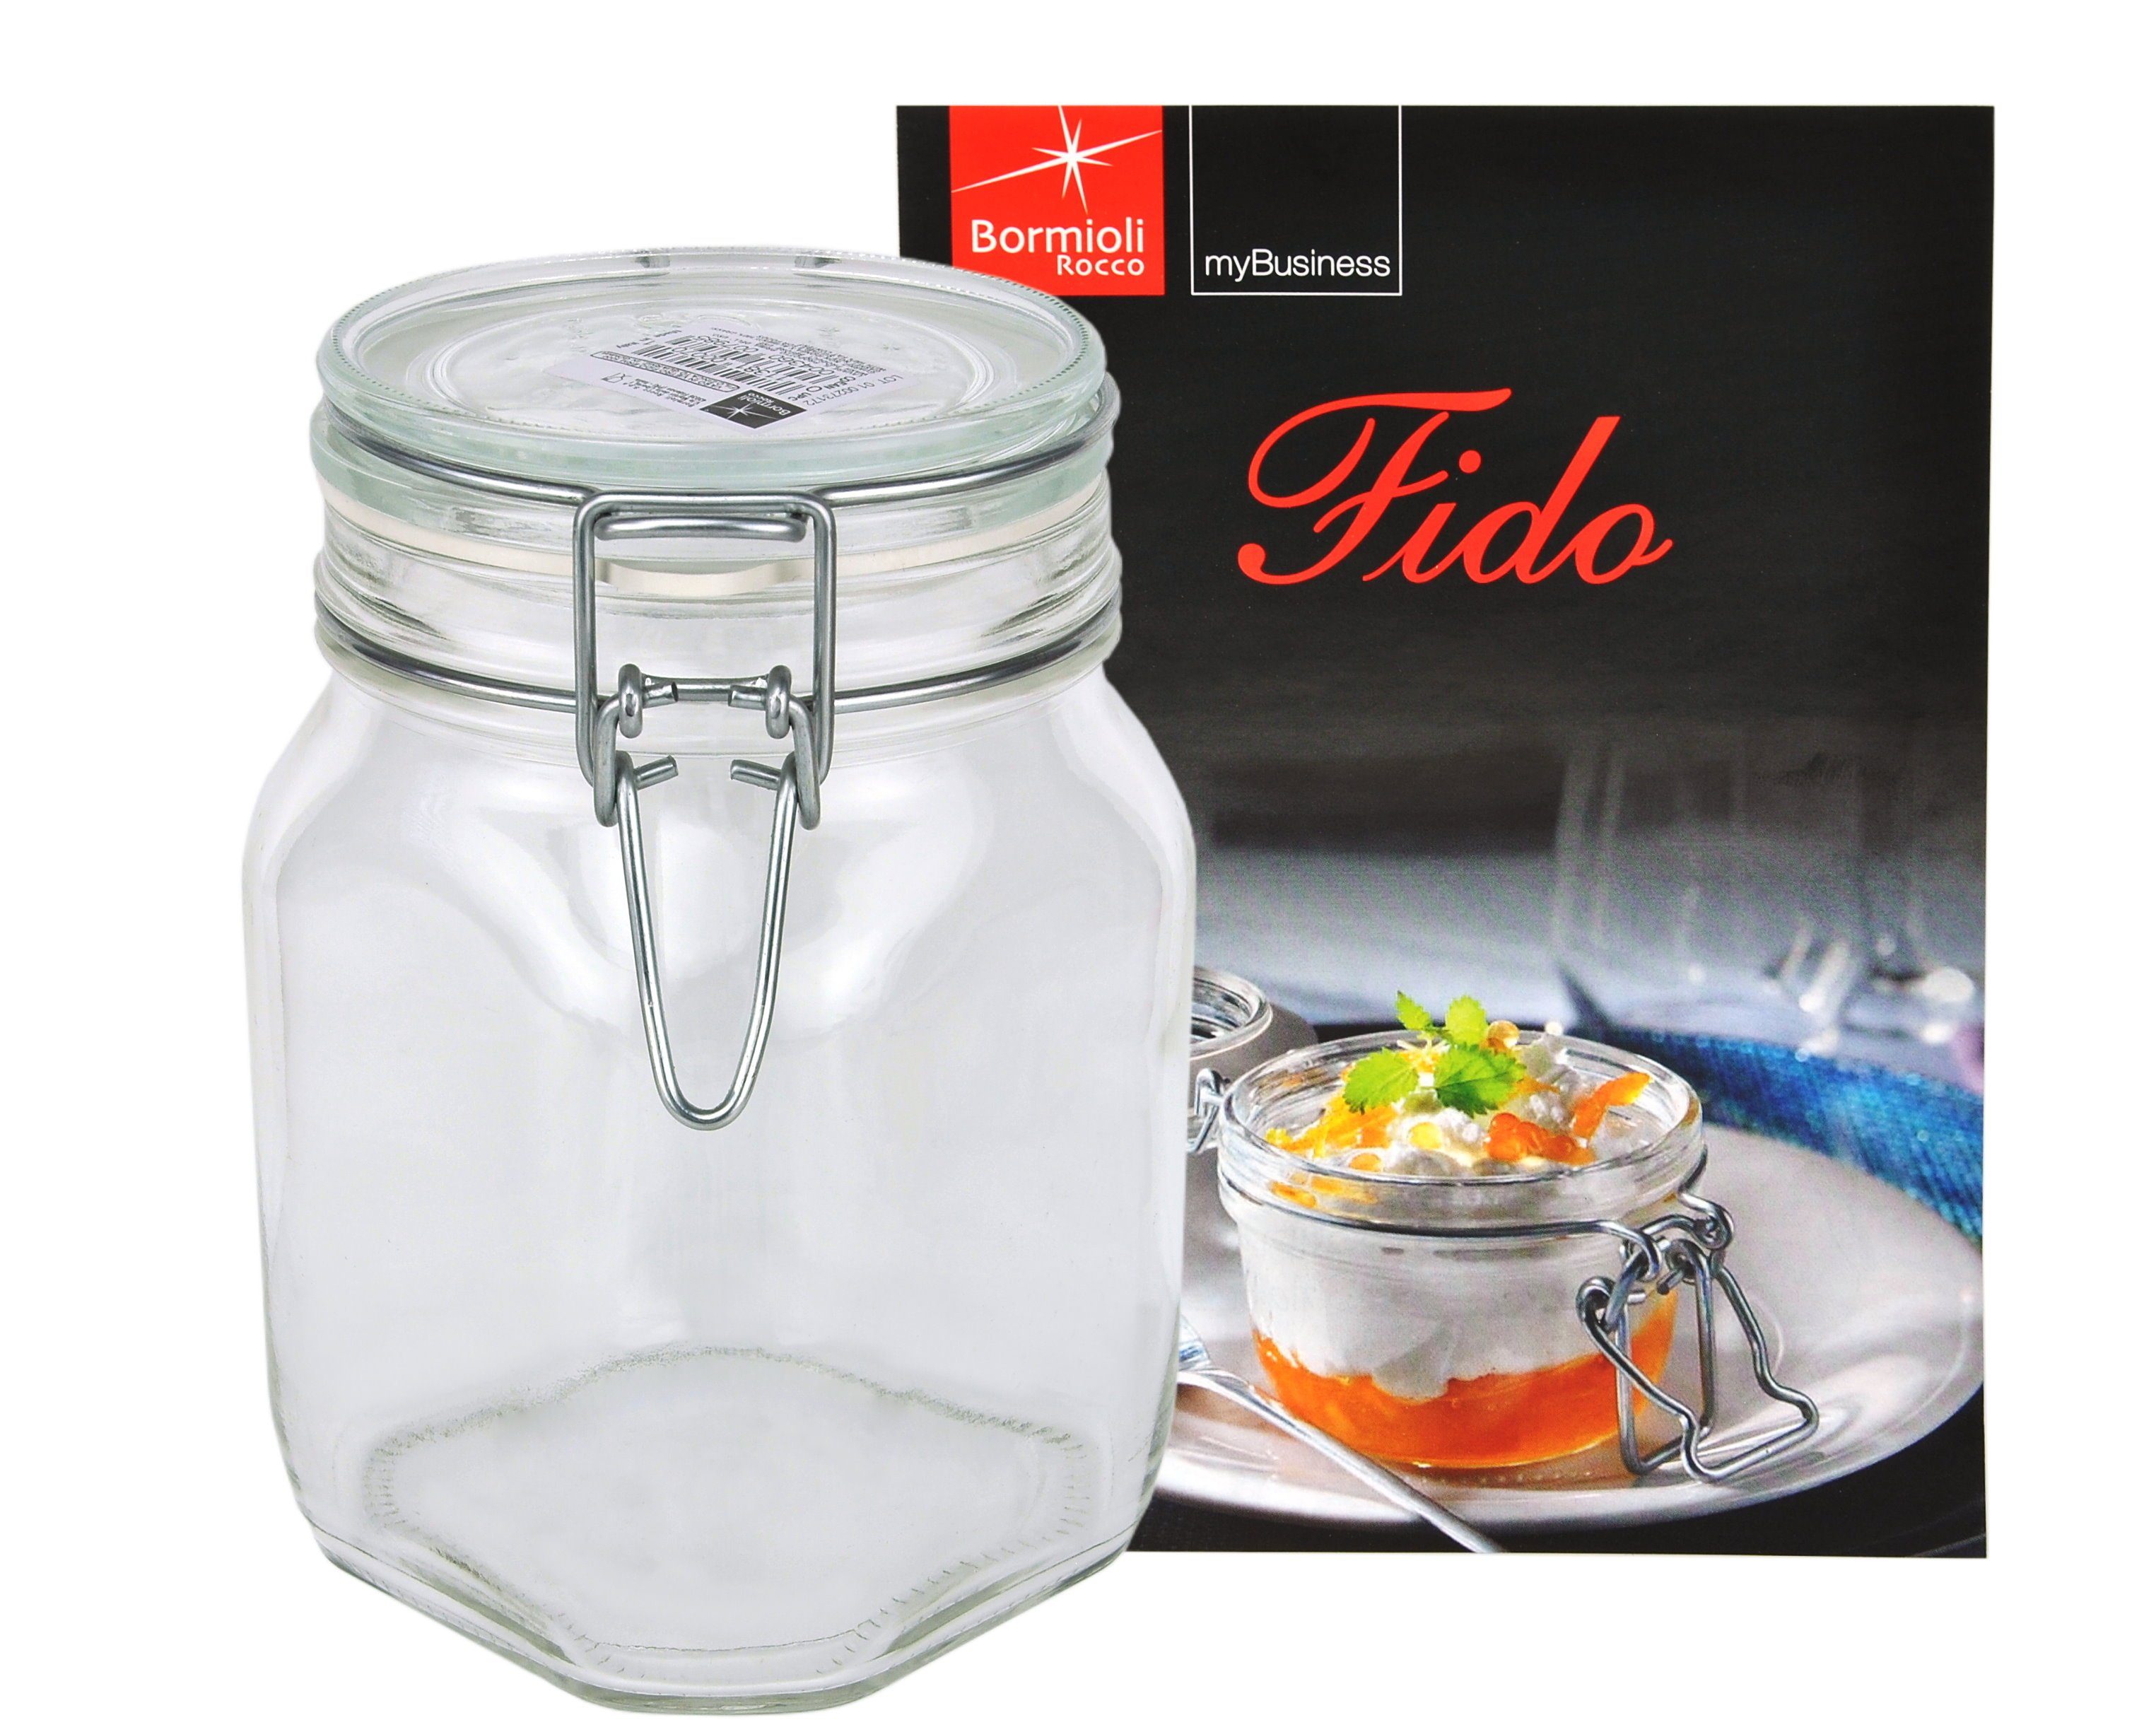 Rezeptheft, MamboCat Glas incl. Original Fido 1,0L Einmachglas Bügelverschluss Vorratsglas